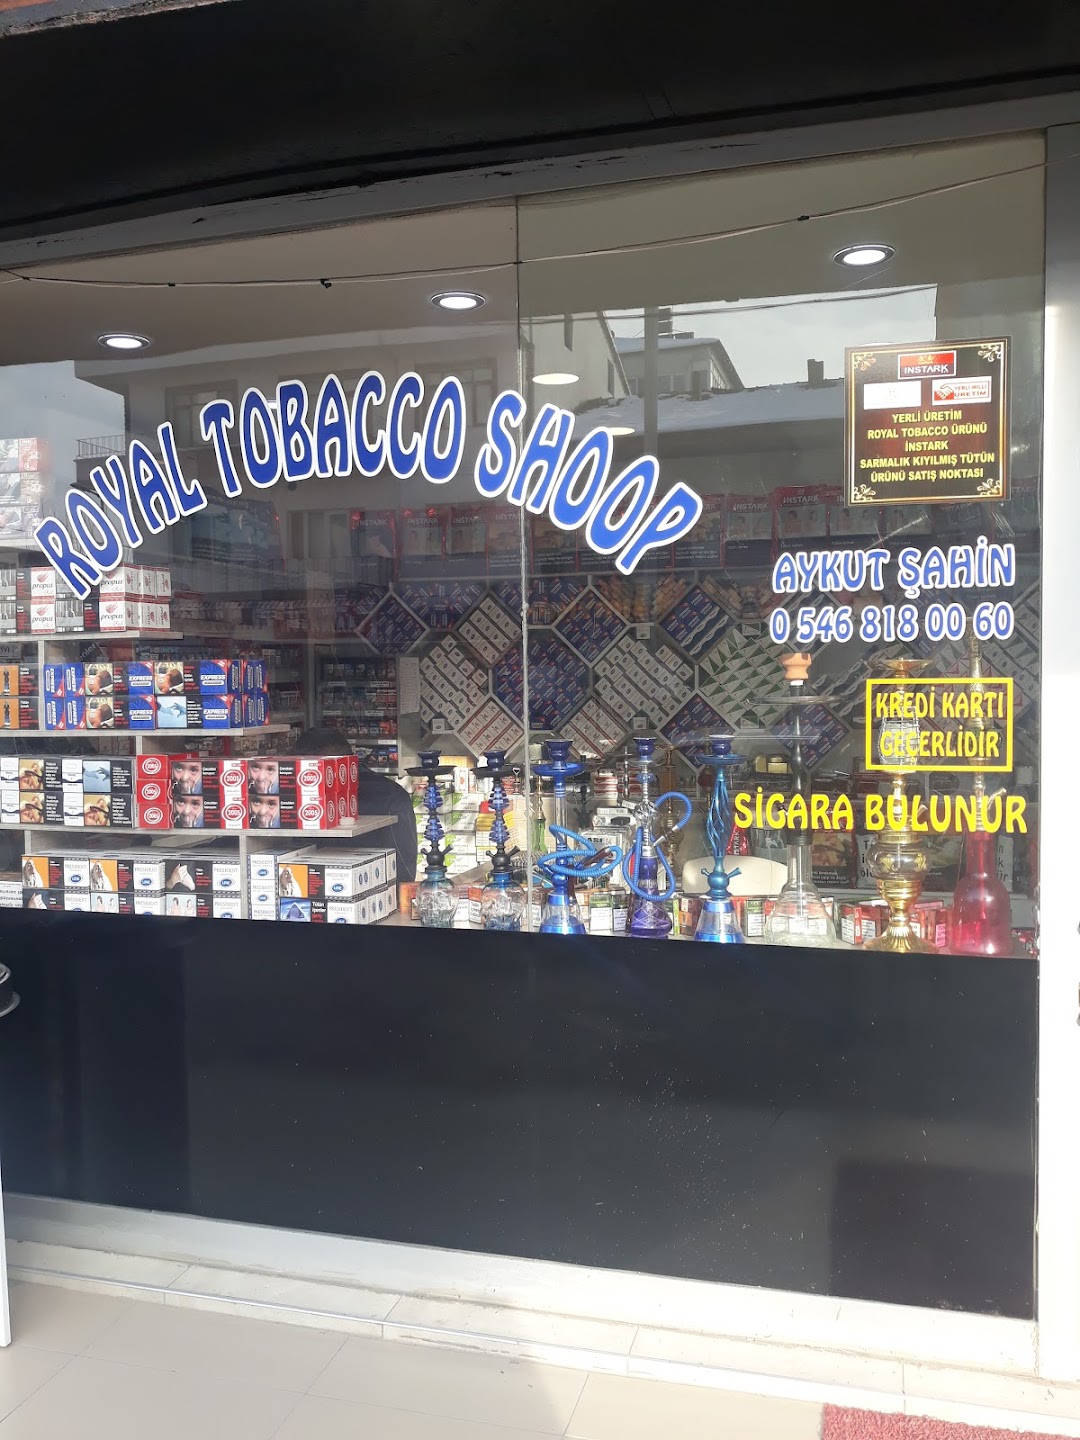 Royal Tobacco Shop